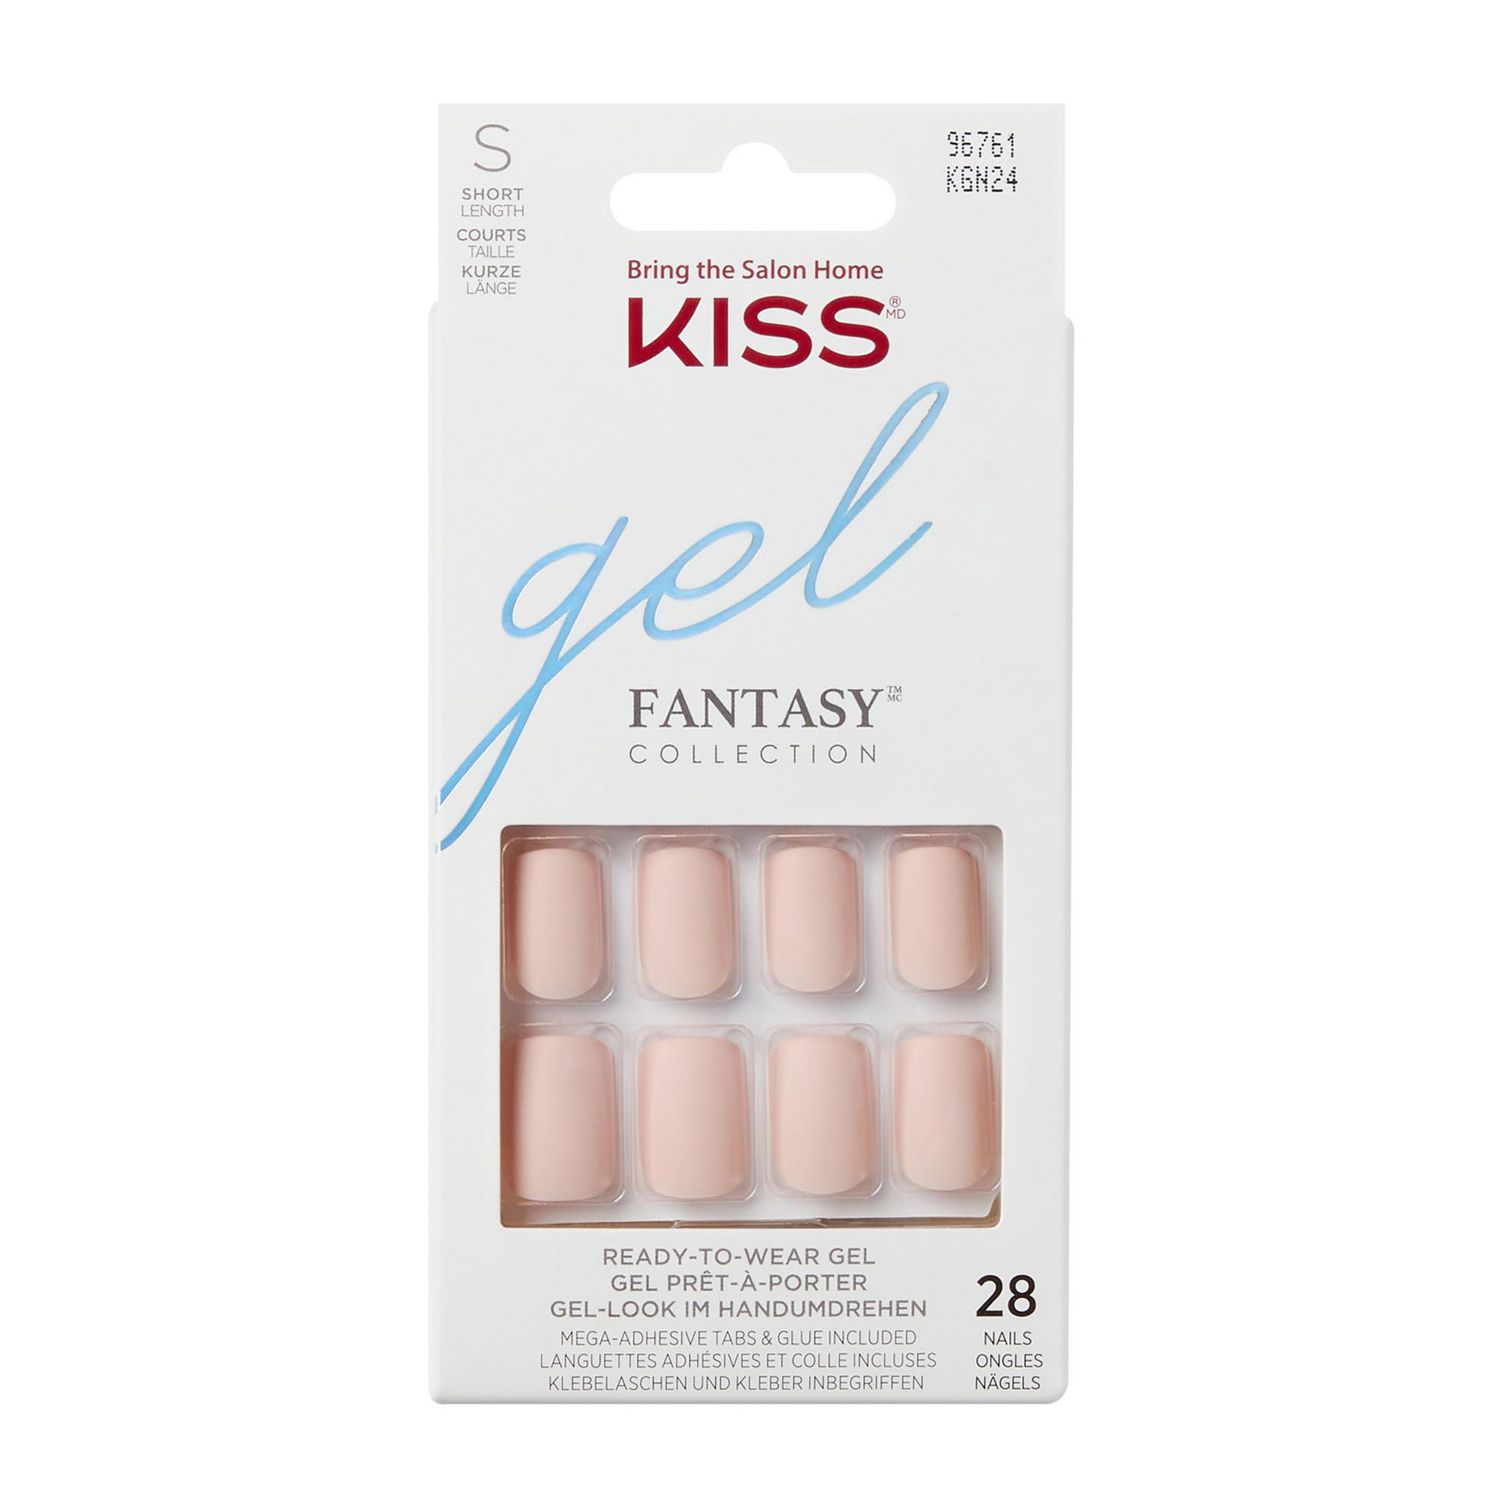 KISS Gel Fantasy Nails -The Little Things | Walmart Canada